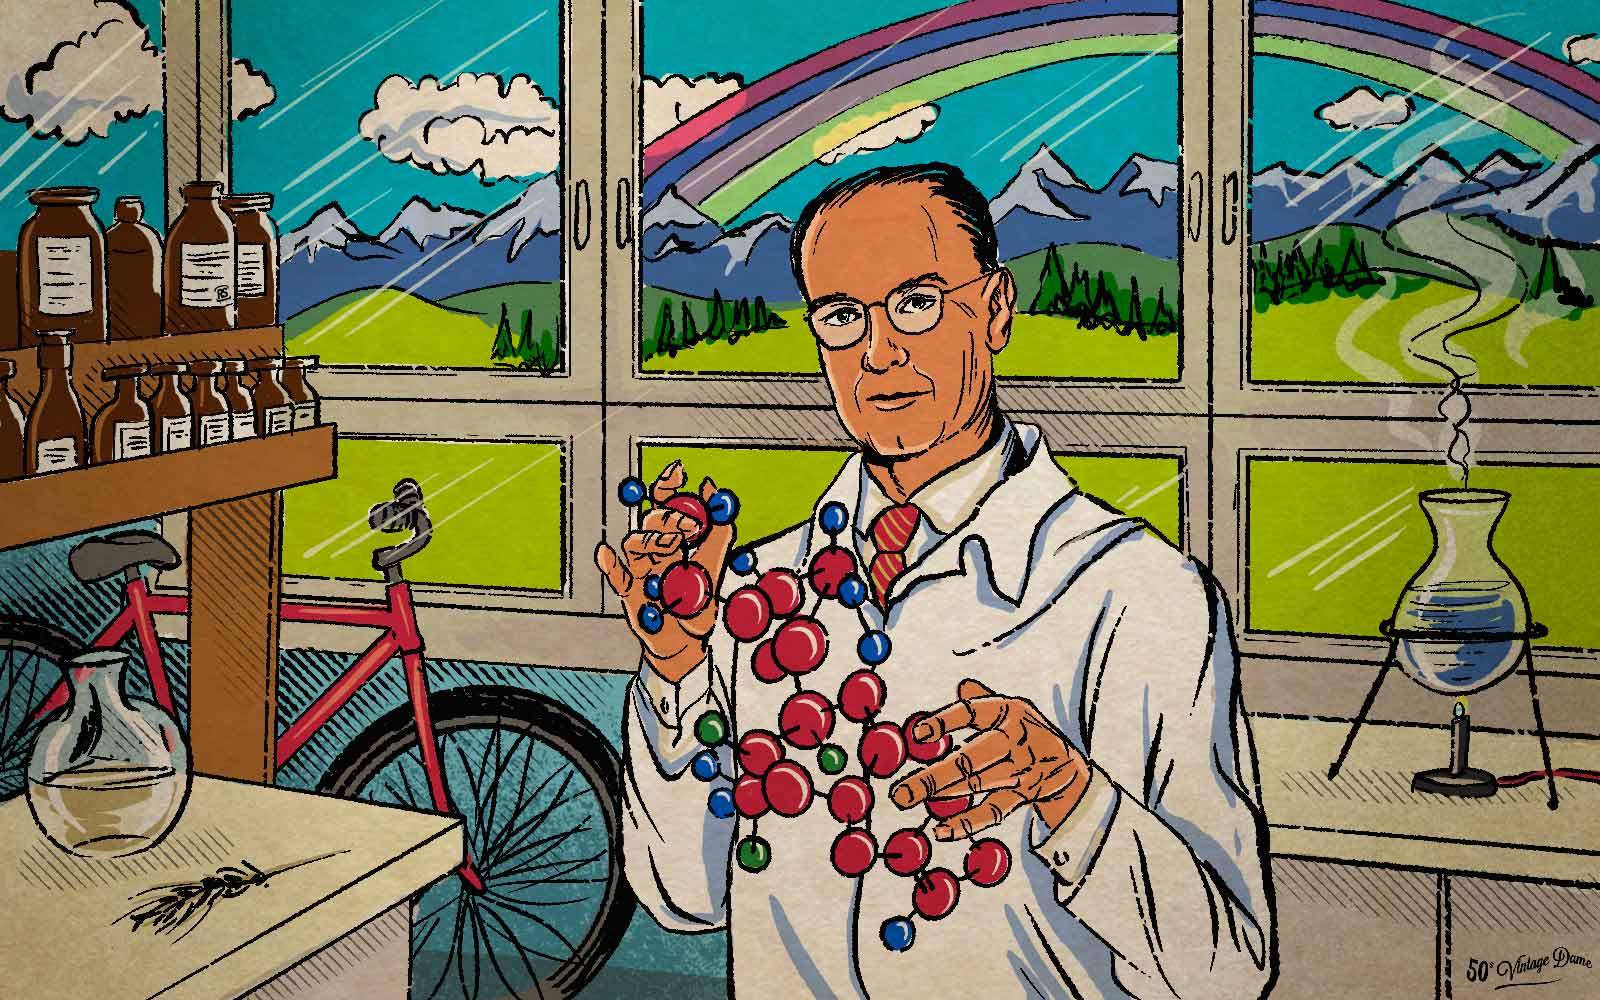 1938- Dr. Albert Hofmann synthesizes LSD for the first time